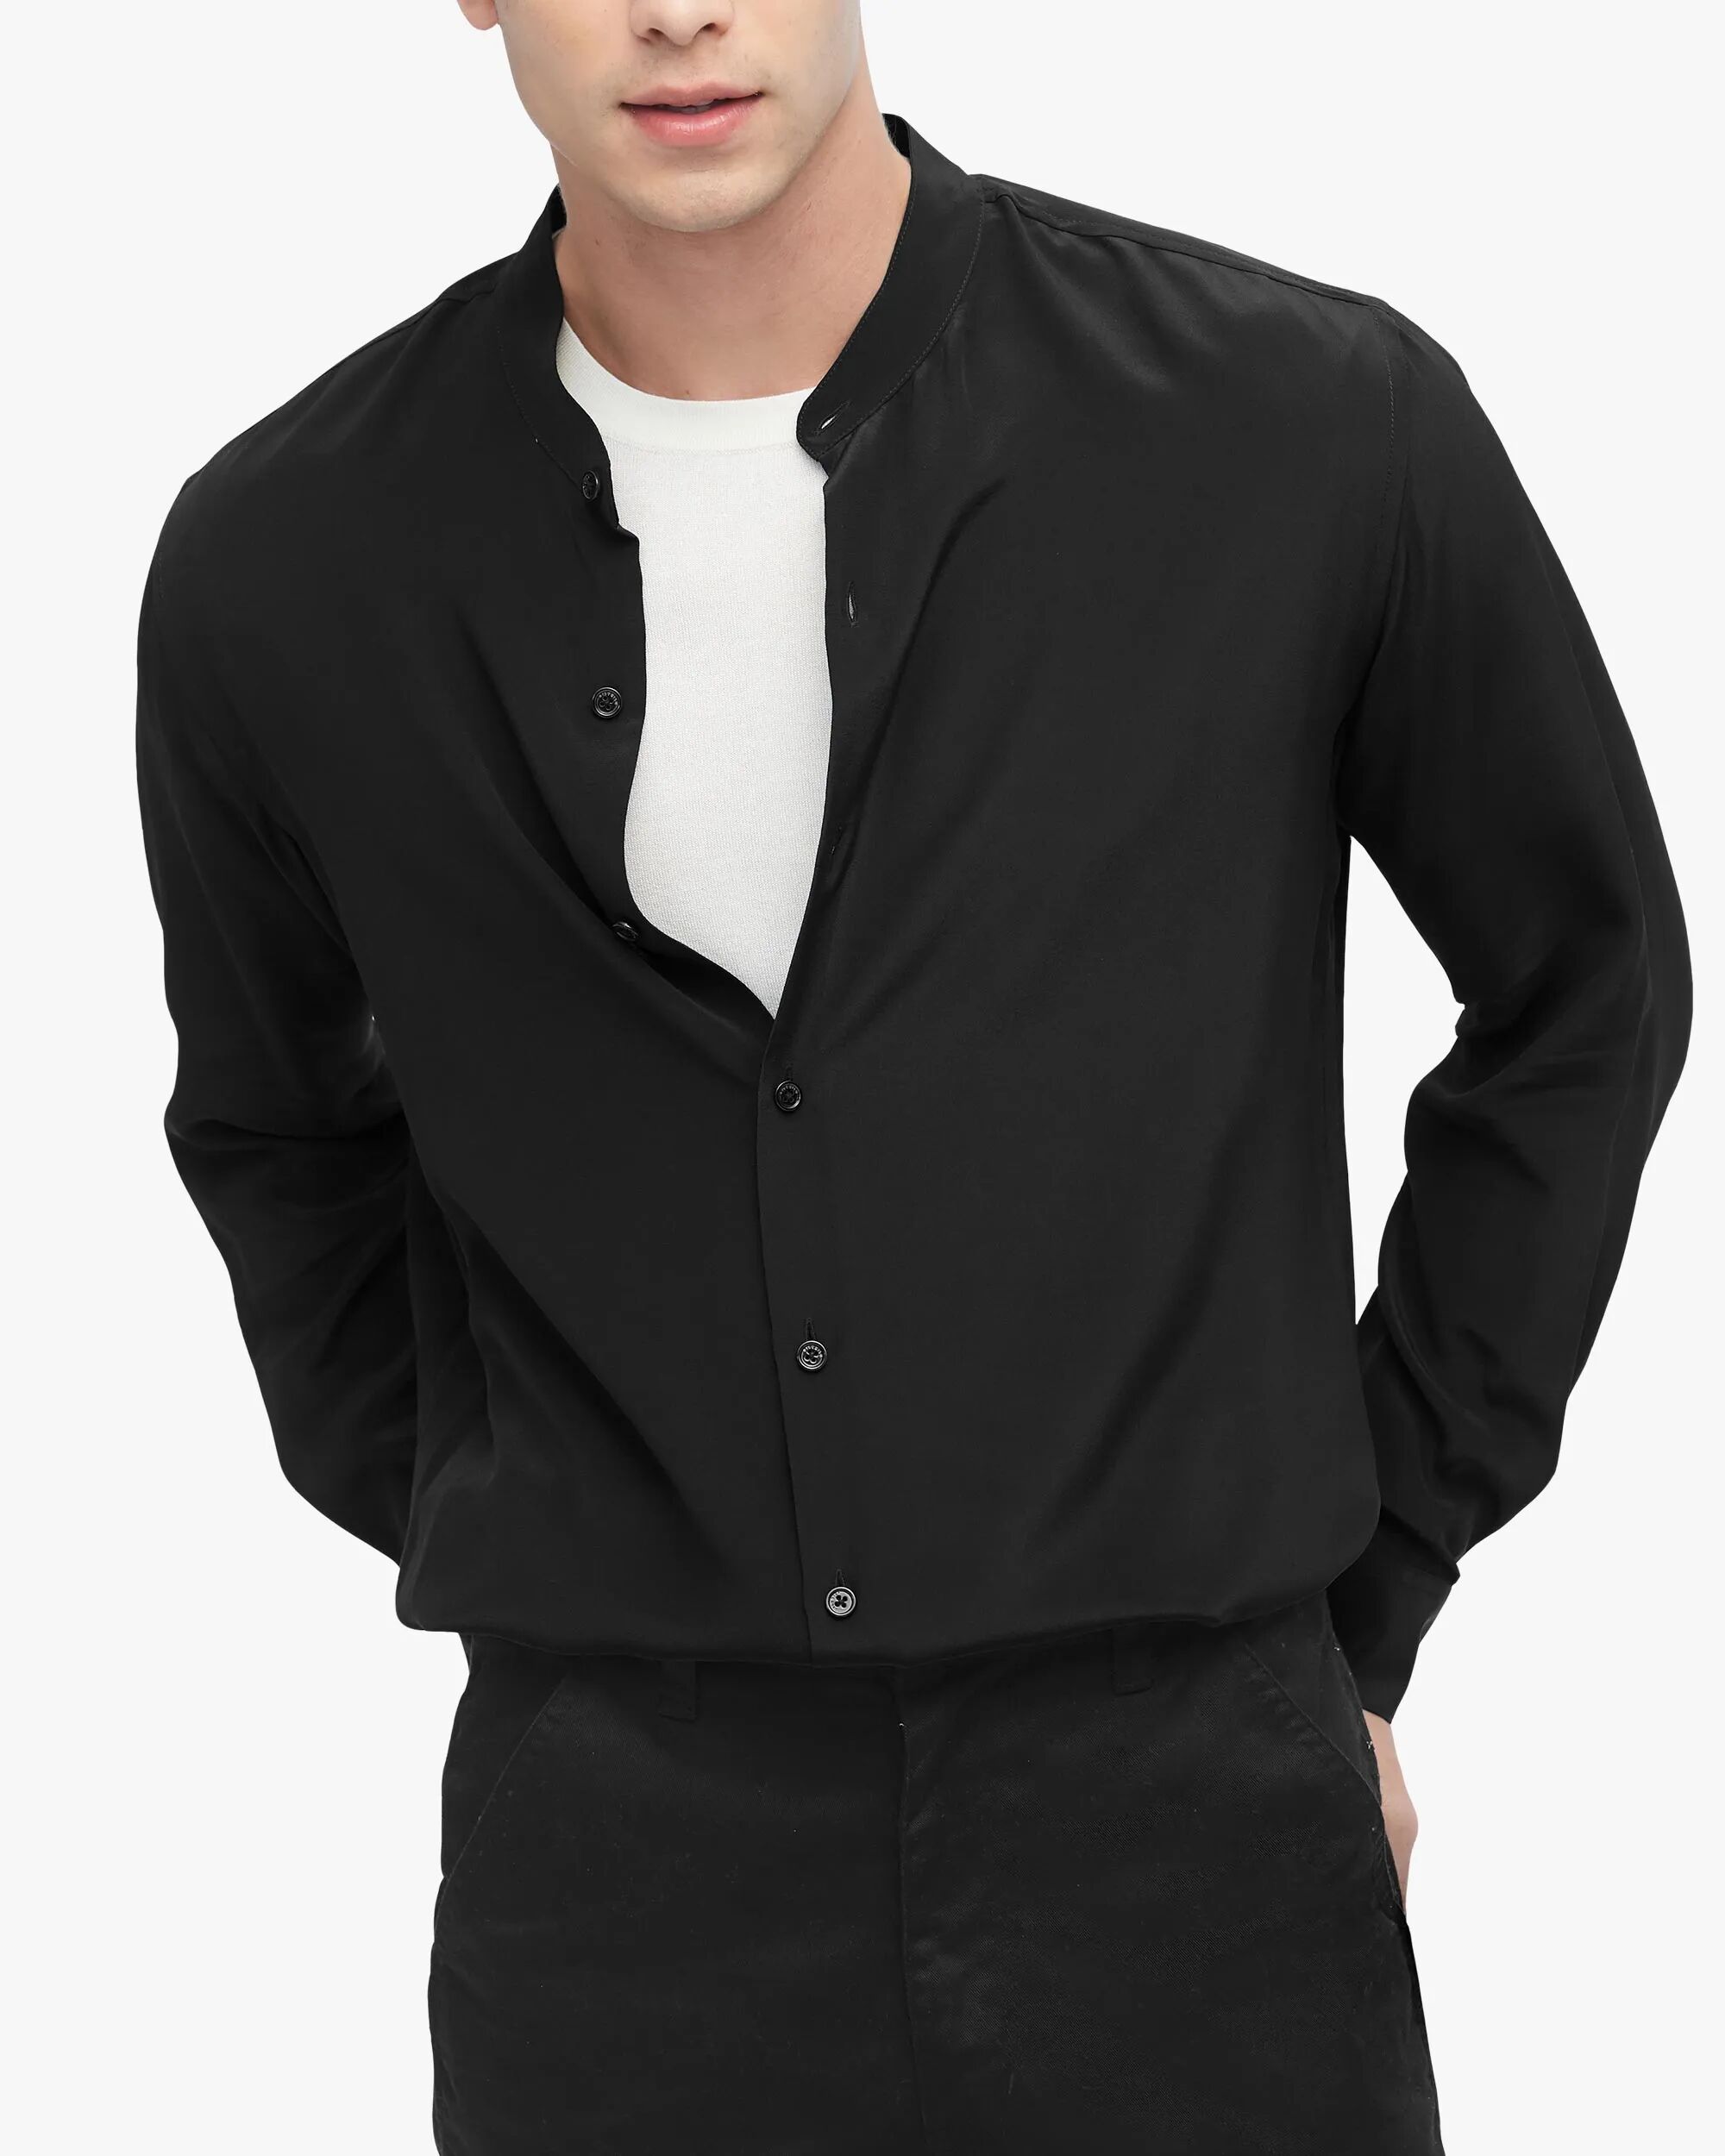 LILYSILK Business Formal Silk Shirt For Men Stand Collar & Round Cuffs Regular Fit Black Xxl